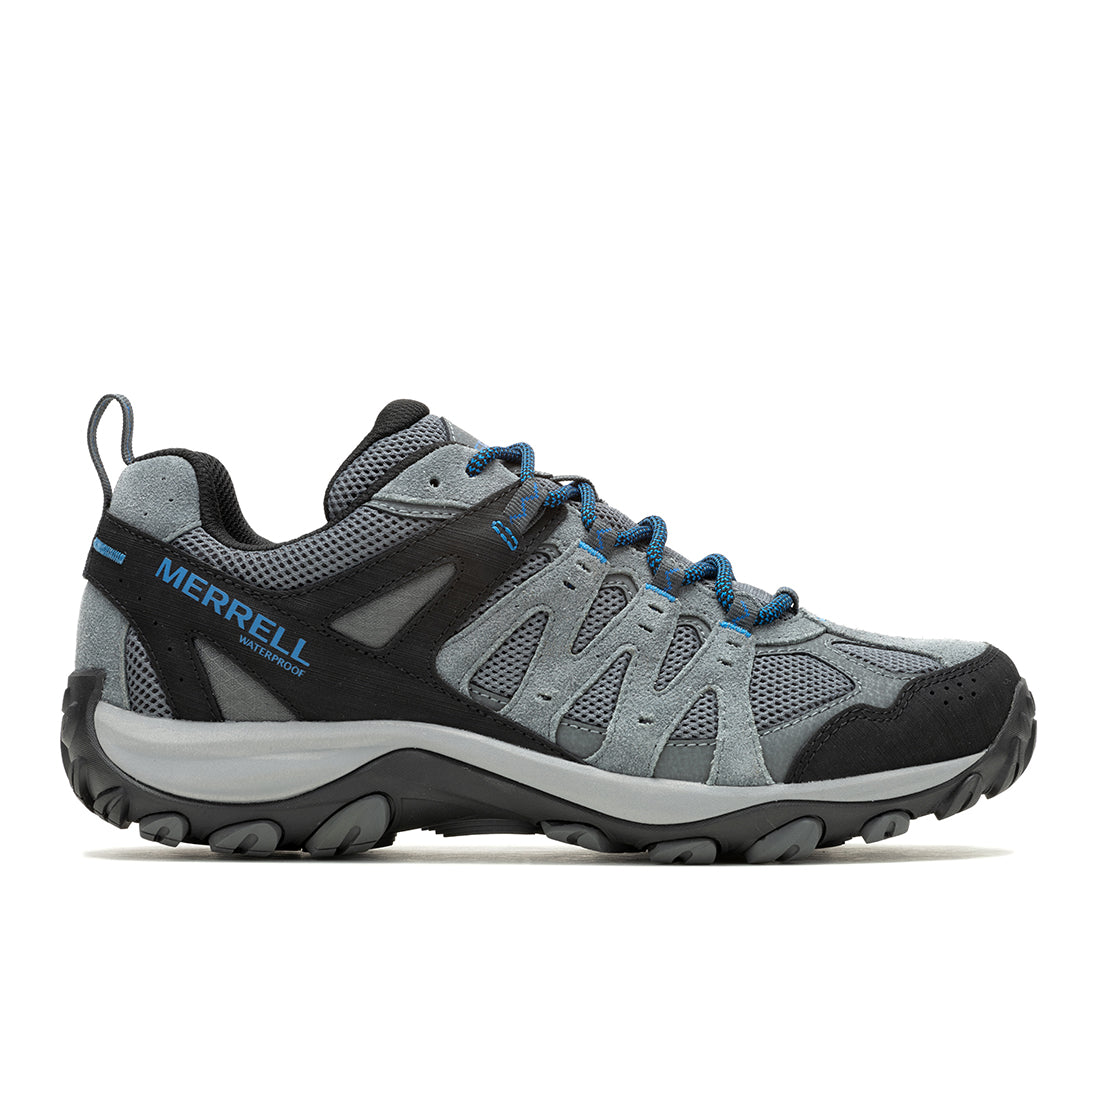 Accentor 3 Waterproof - Rock/Blue Mens Hiking Shoes | Merrell Online Store